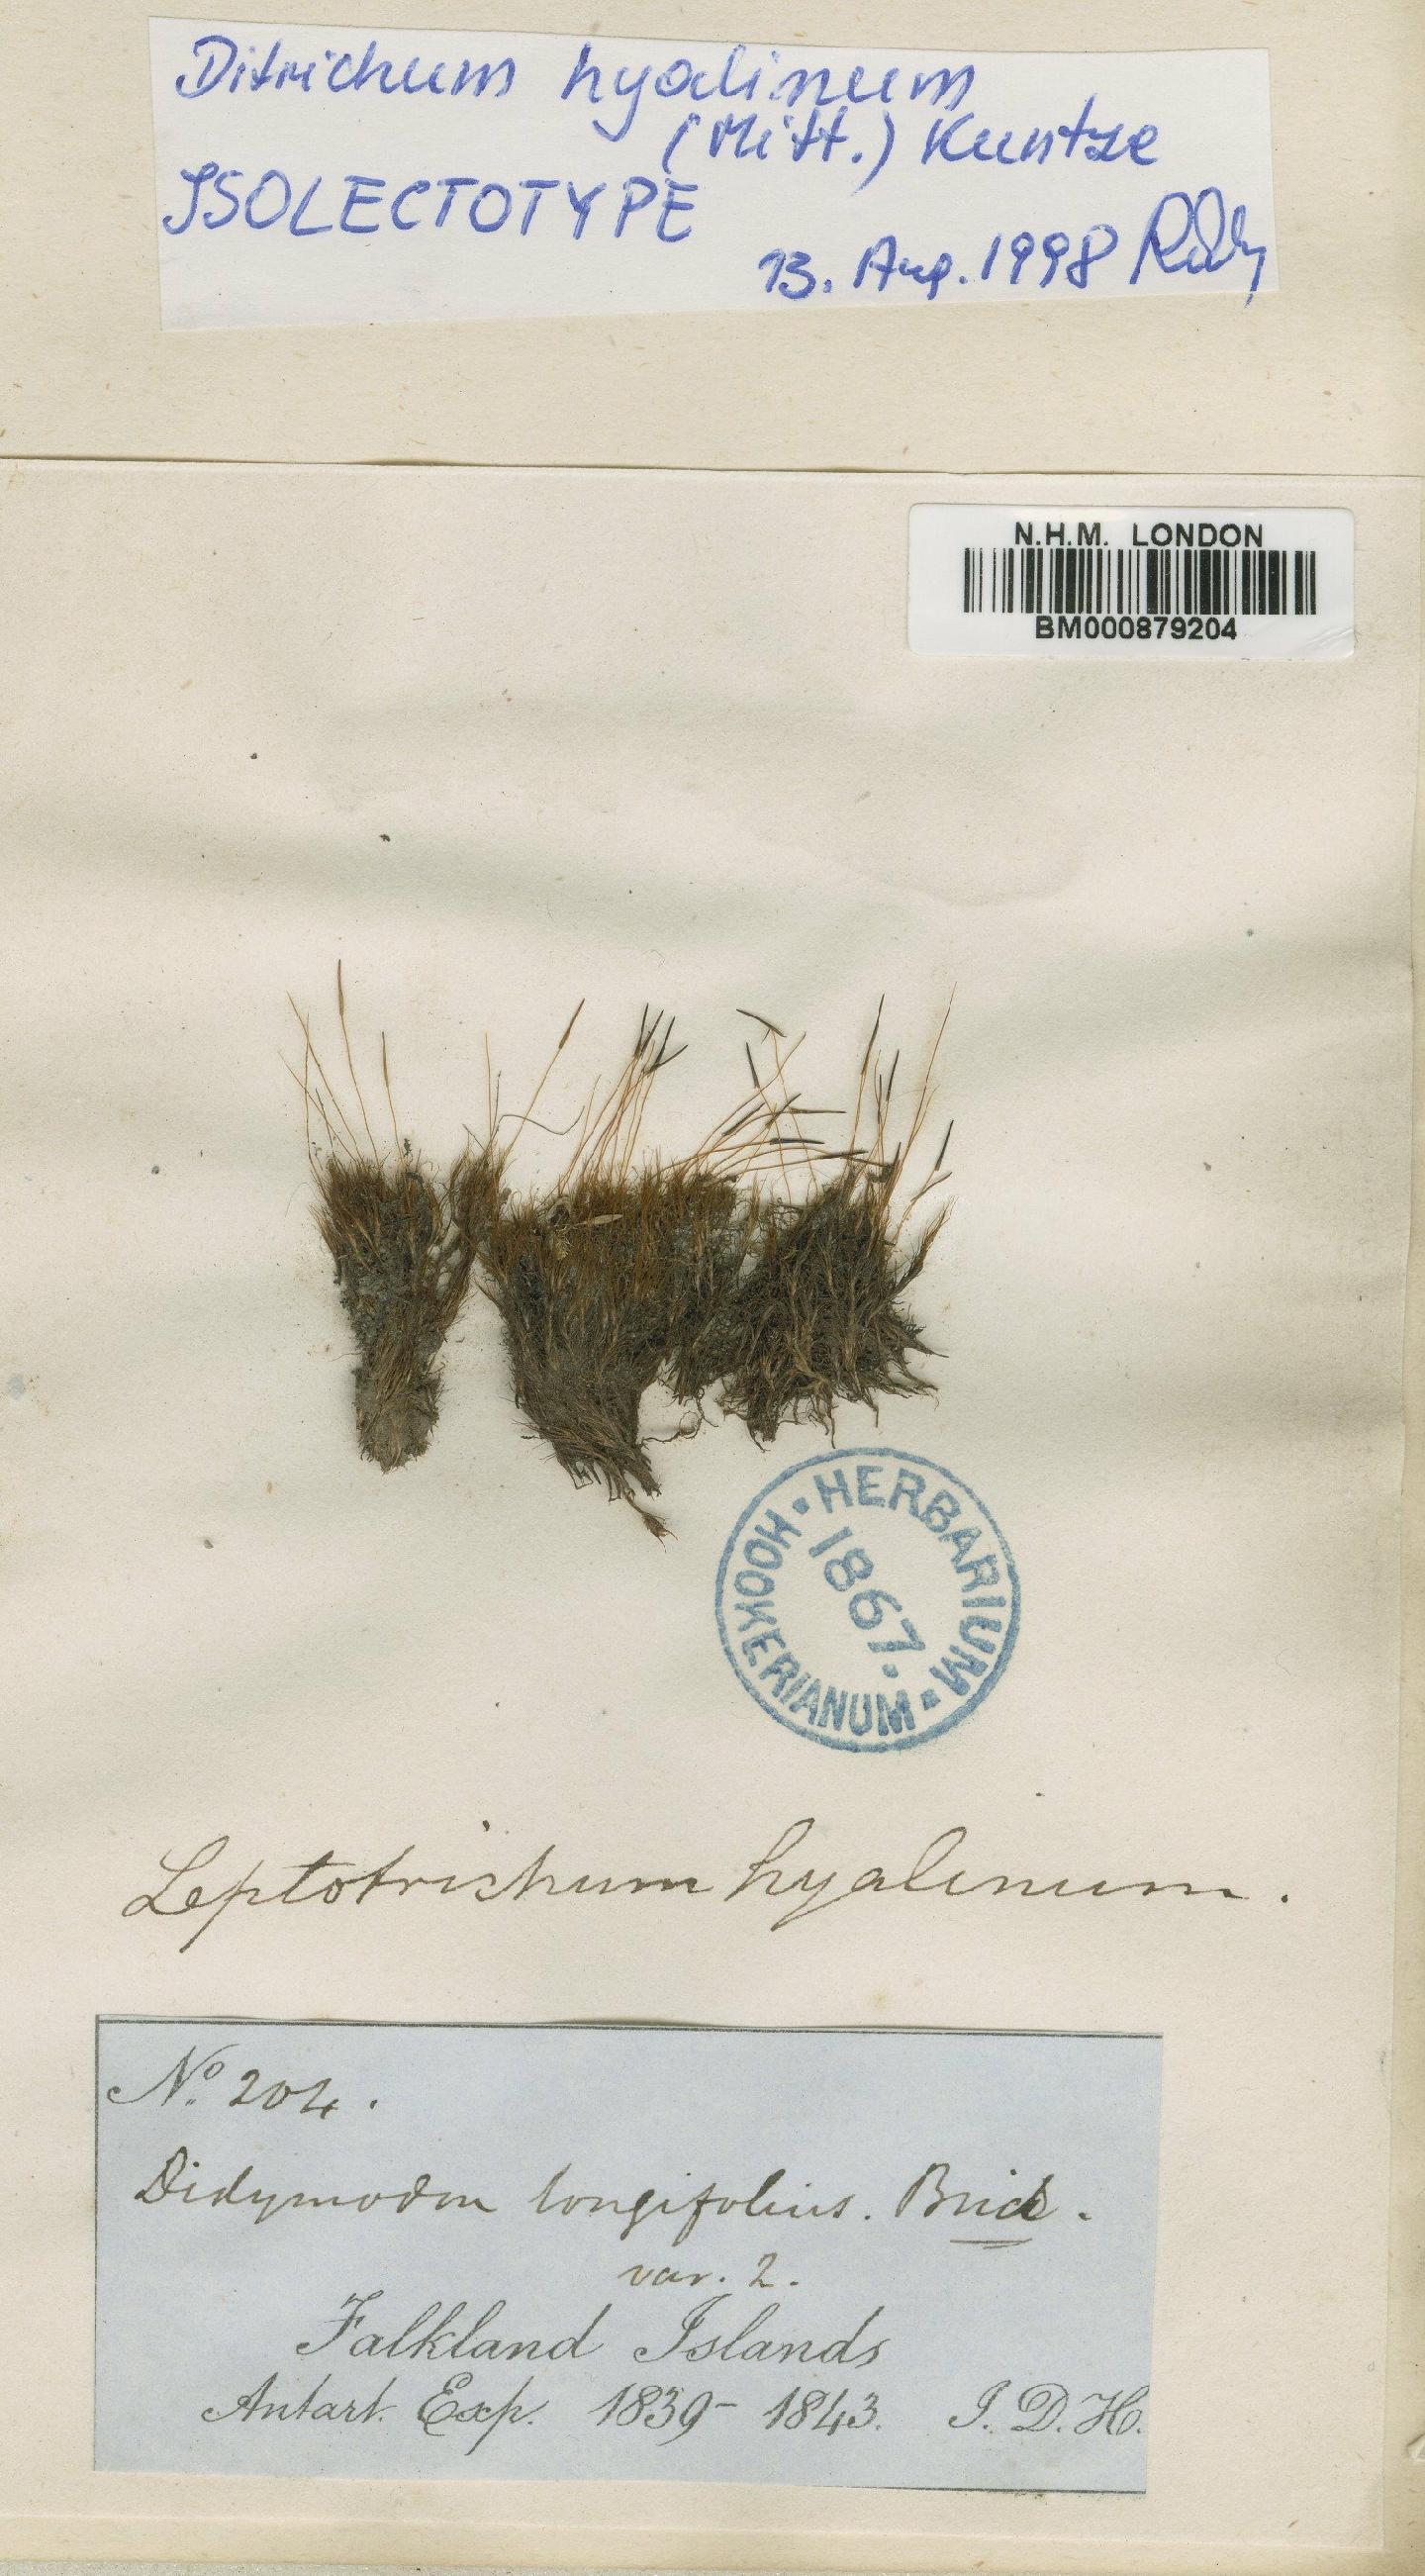 To NHMUK collection (Ditrichum hyalinum (Mitt.) Kuntze; Isolectotype; NHMUK:ecatalogue:4530726)